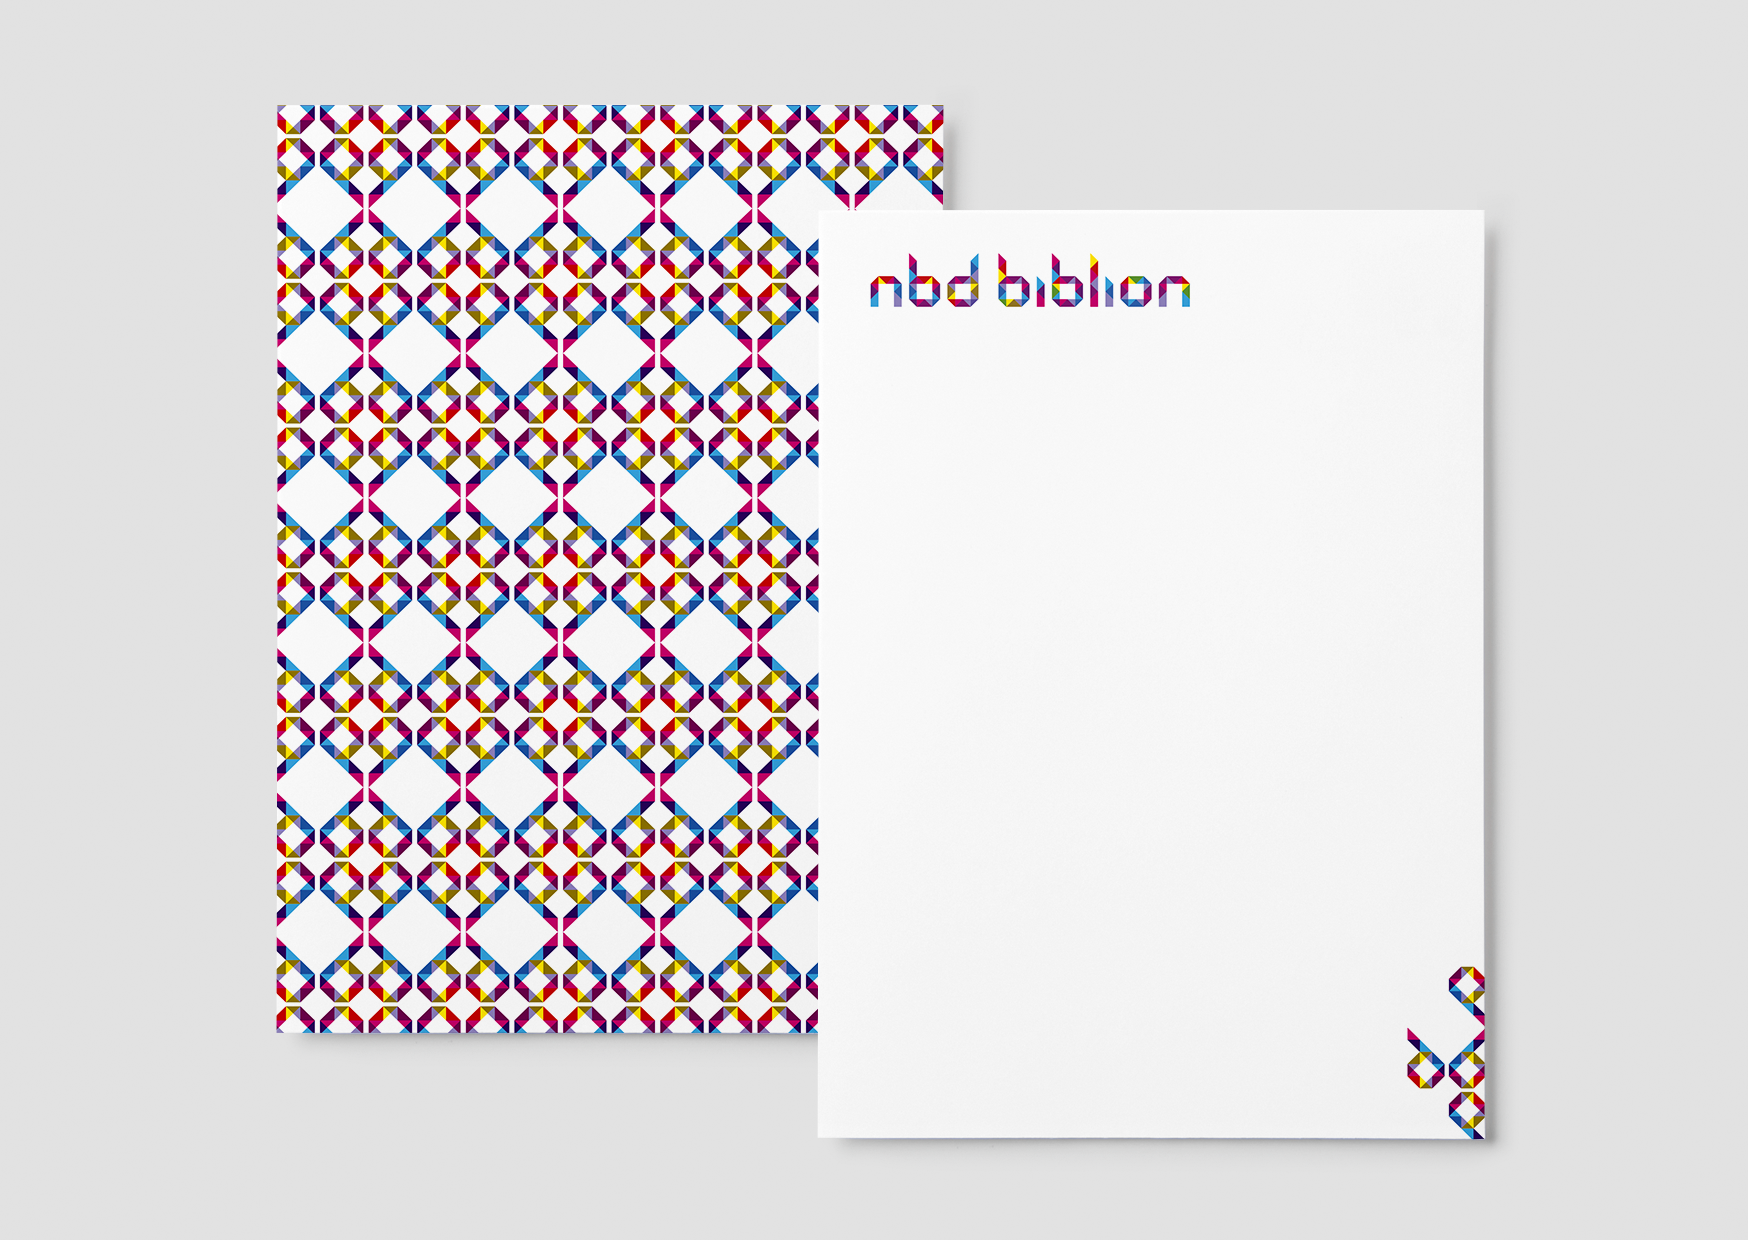 NBD Biblion, Studio Enkelvoud